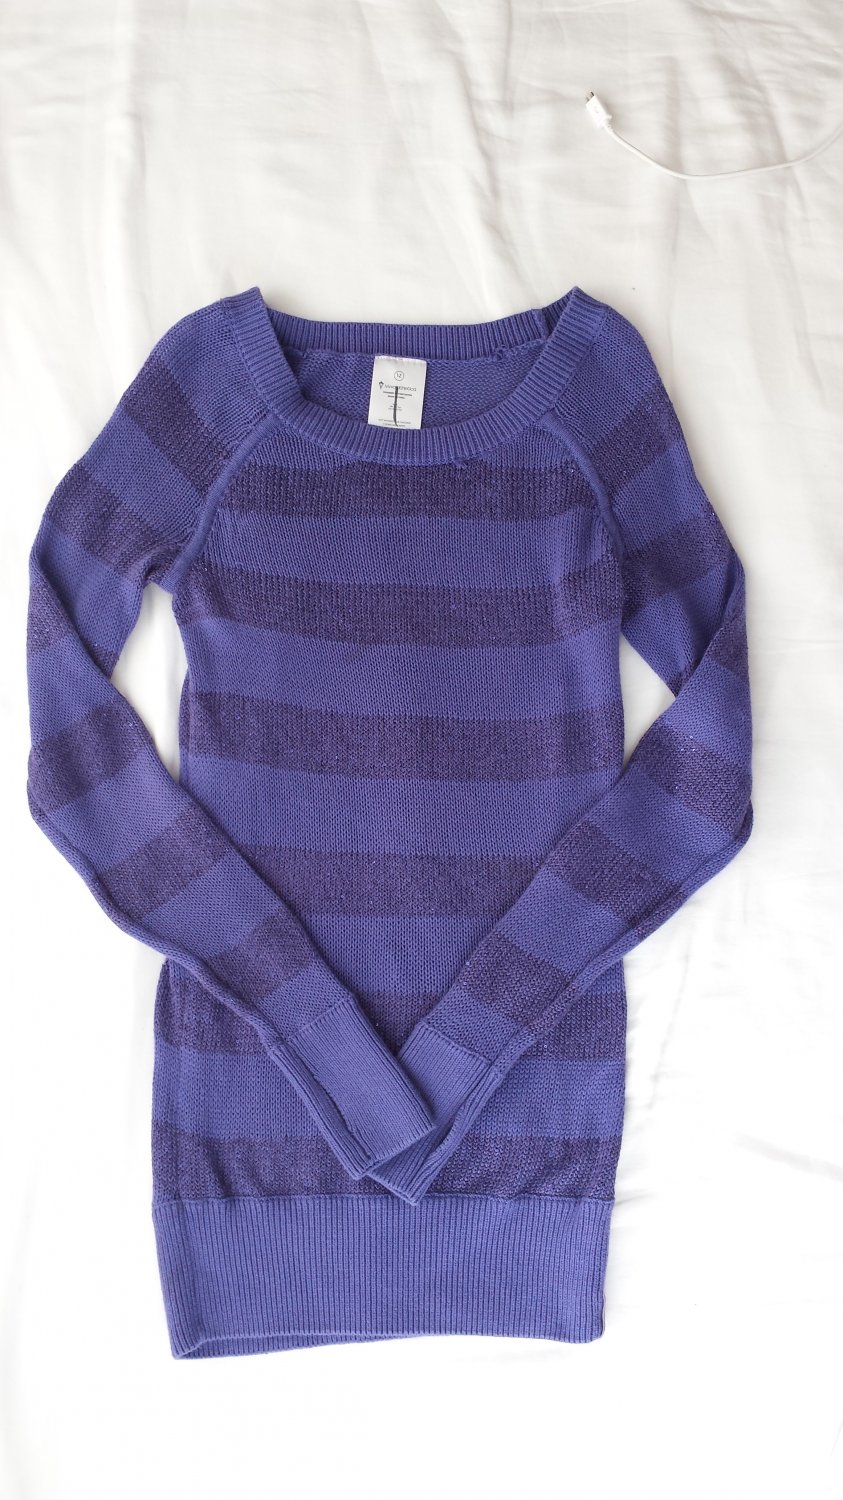 Ivivva Girls Size 12 Purple Sweater